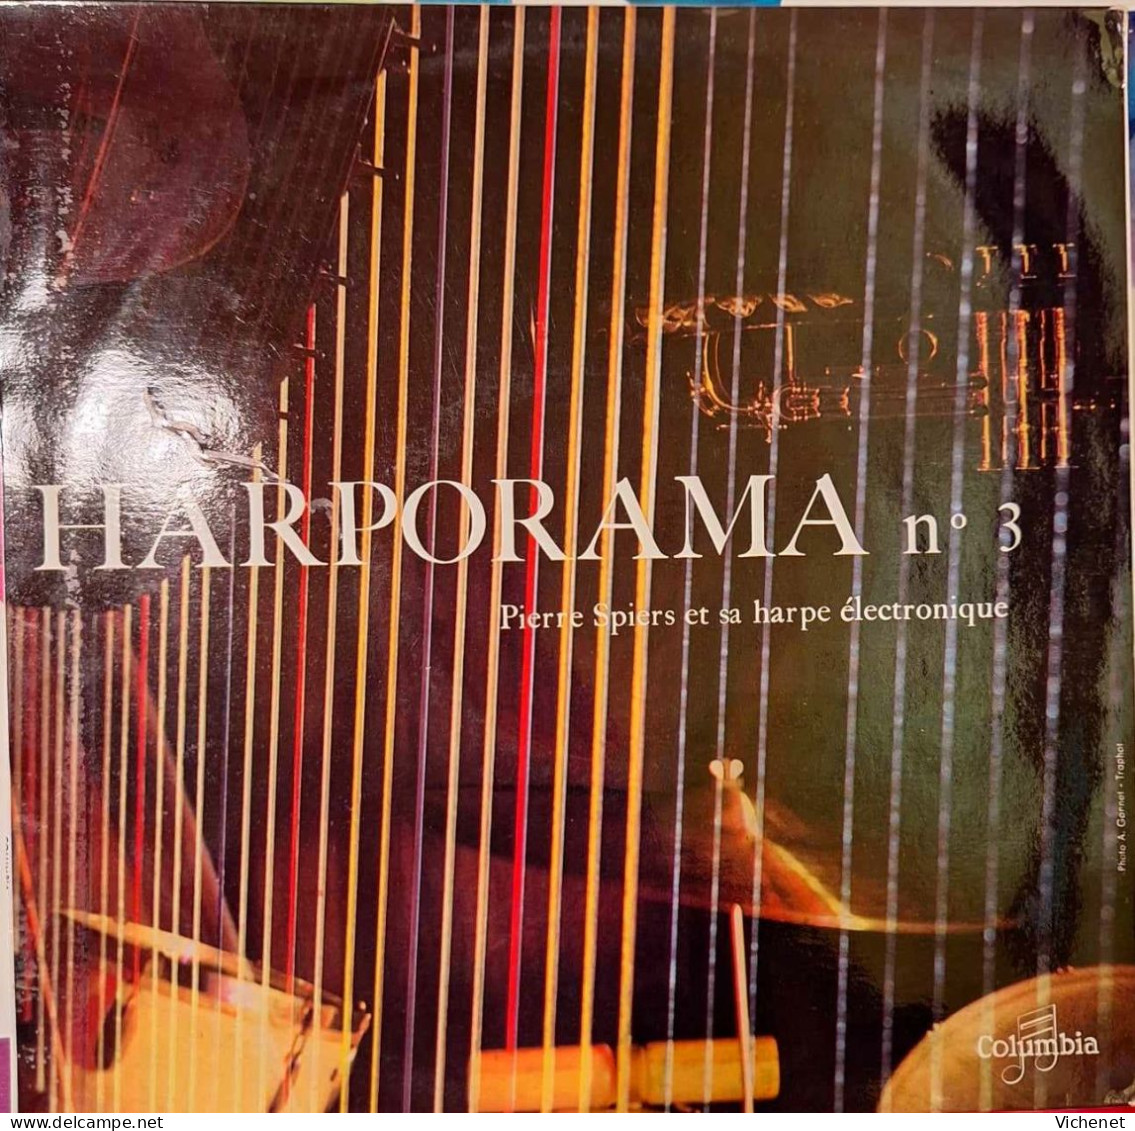 Pierre Spiers Et Sa Harpe Electronique - Harporama N° 3 - 25 Cm - Spezialformate